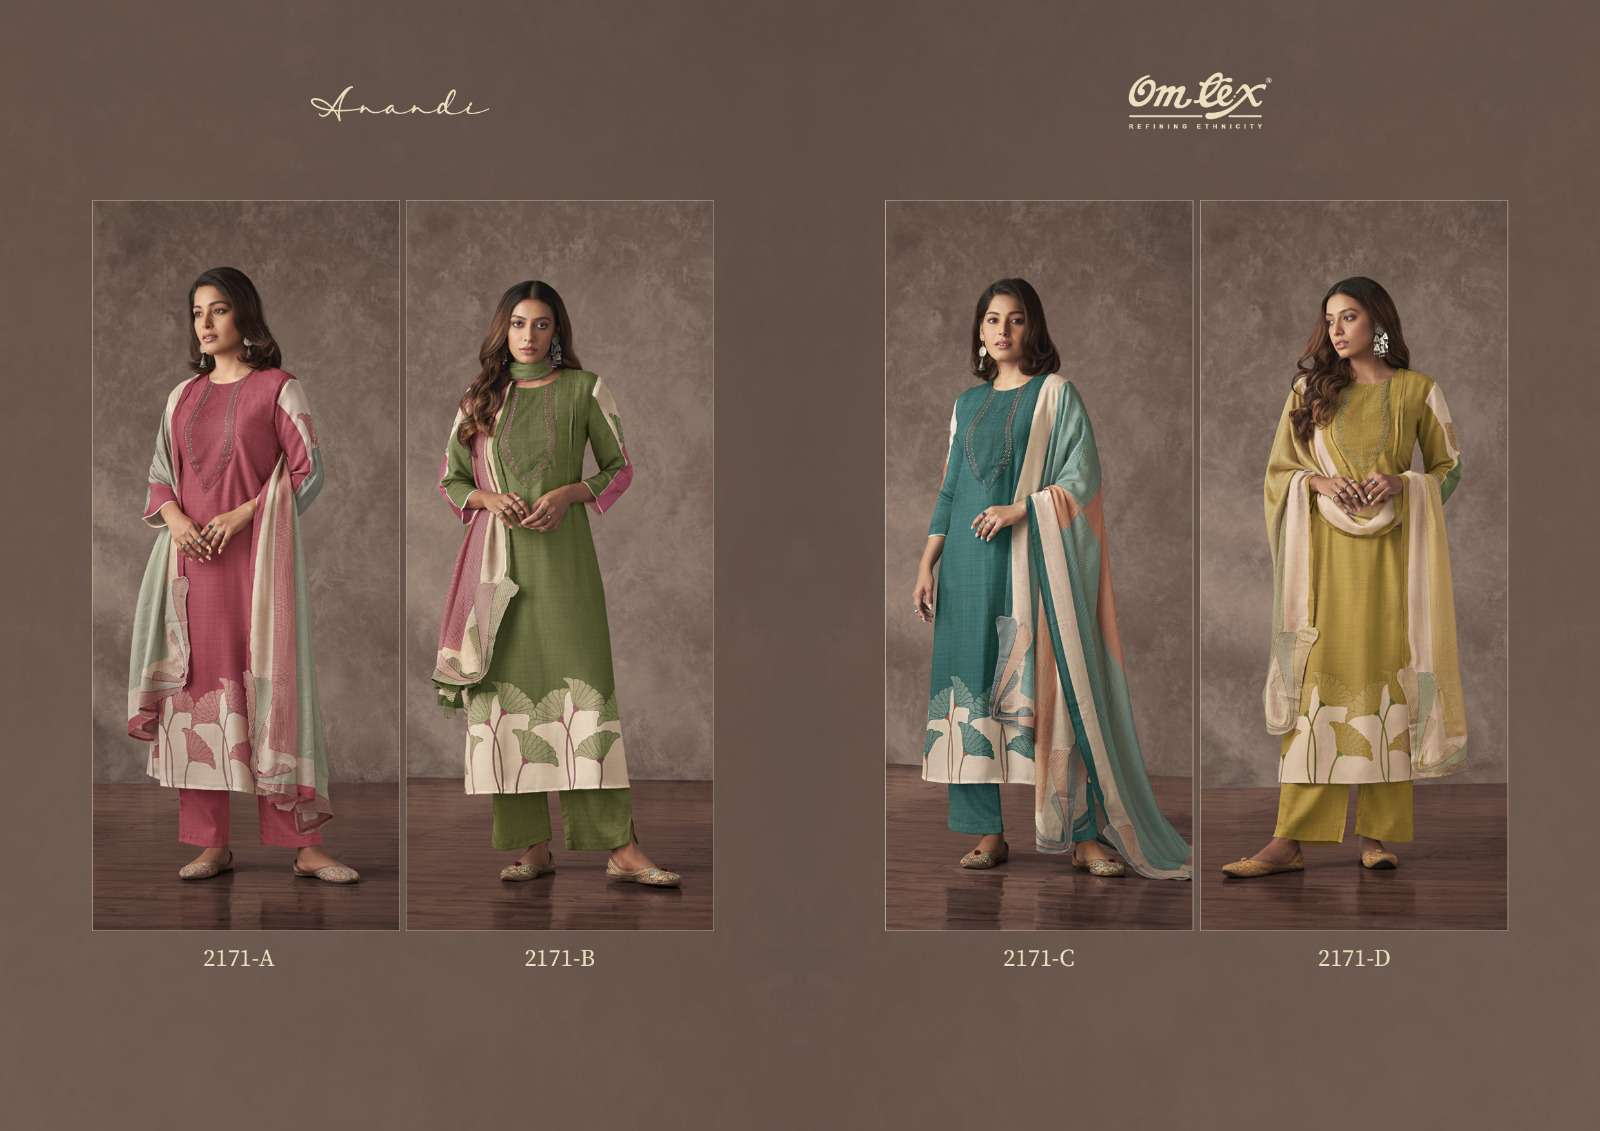 omtex anandi 2171 colour series designer fancy pakistani suit wholesaler surat gujarat